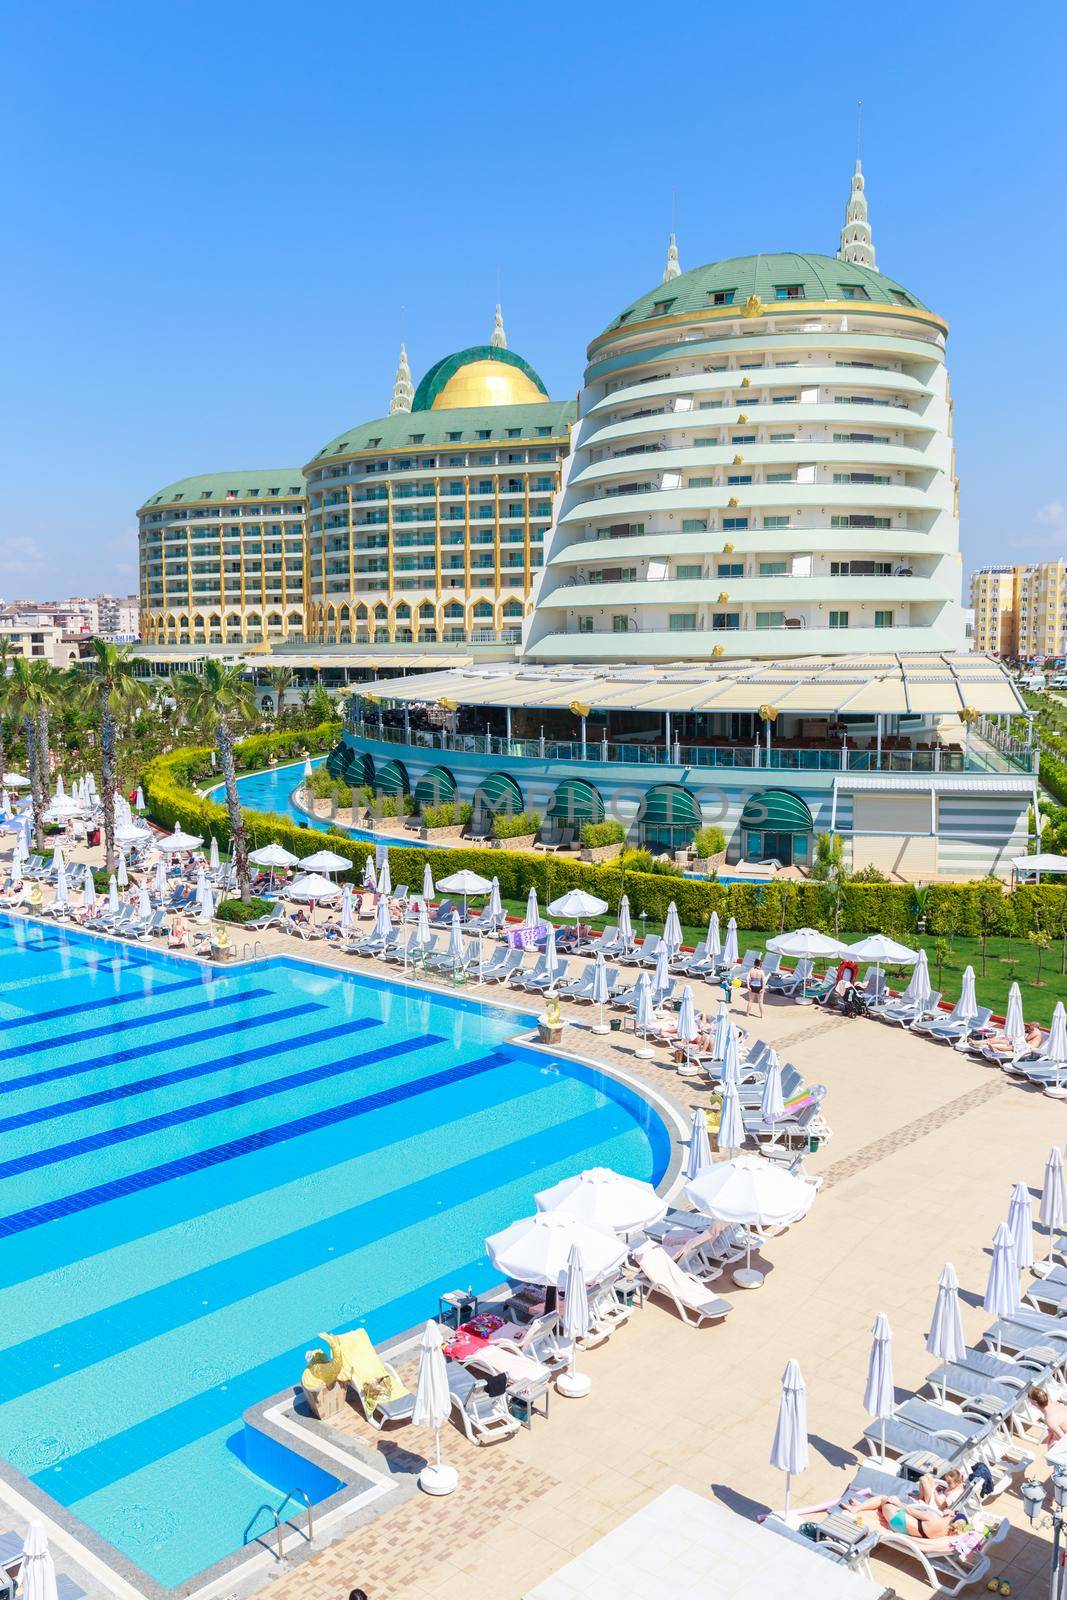 ANTALYA, TURKEY - MAY 11, 2014: Delphin Imperial hotel with swimming pool on MAY 11, 2014 in Antalya.